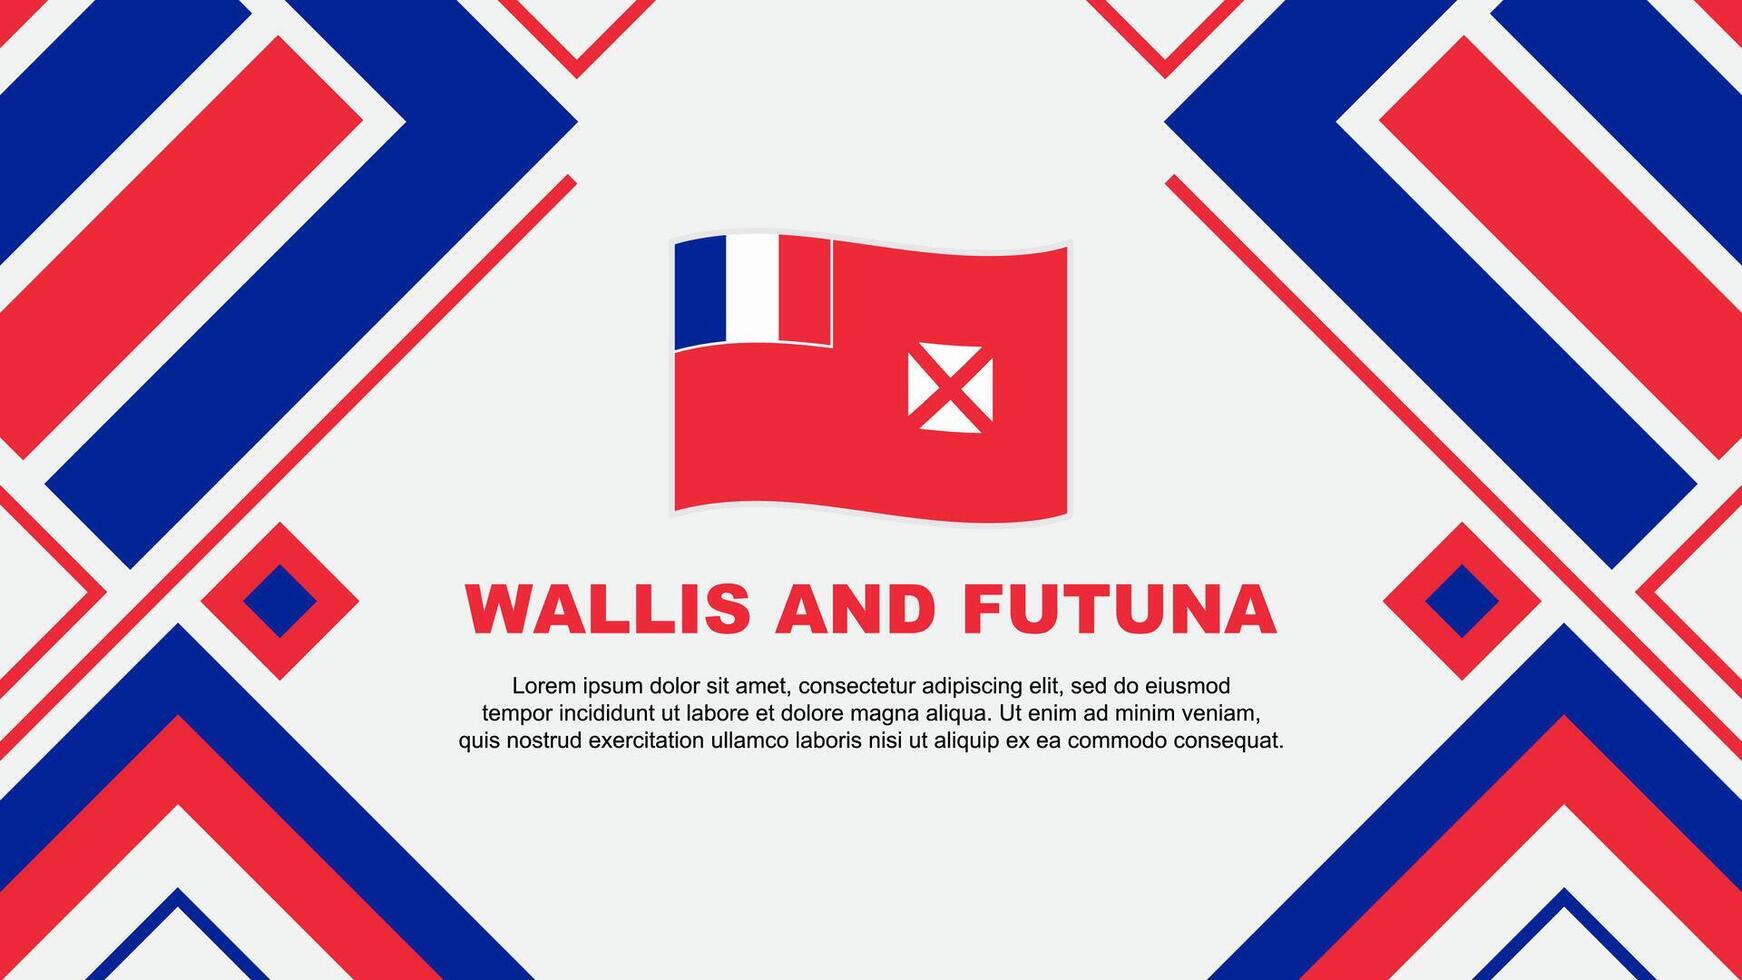 Wallis And Futuna Flag Abstract Background Design Template. Wallis And Futuna Independence Day Banner Wallpaper Vector Illustration. Wallis And Futuna Flag